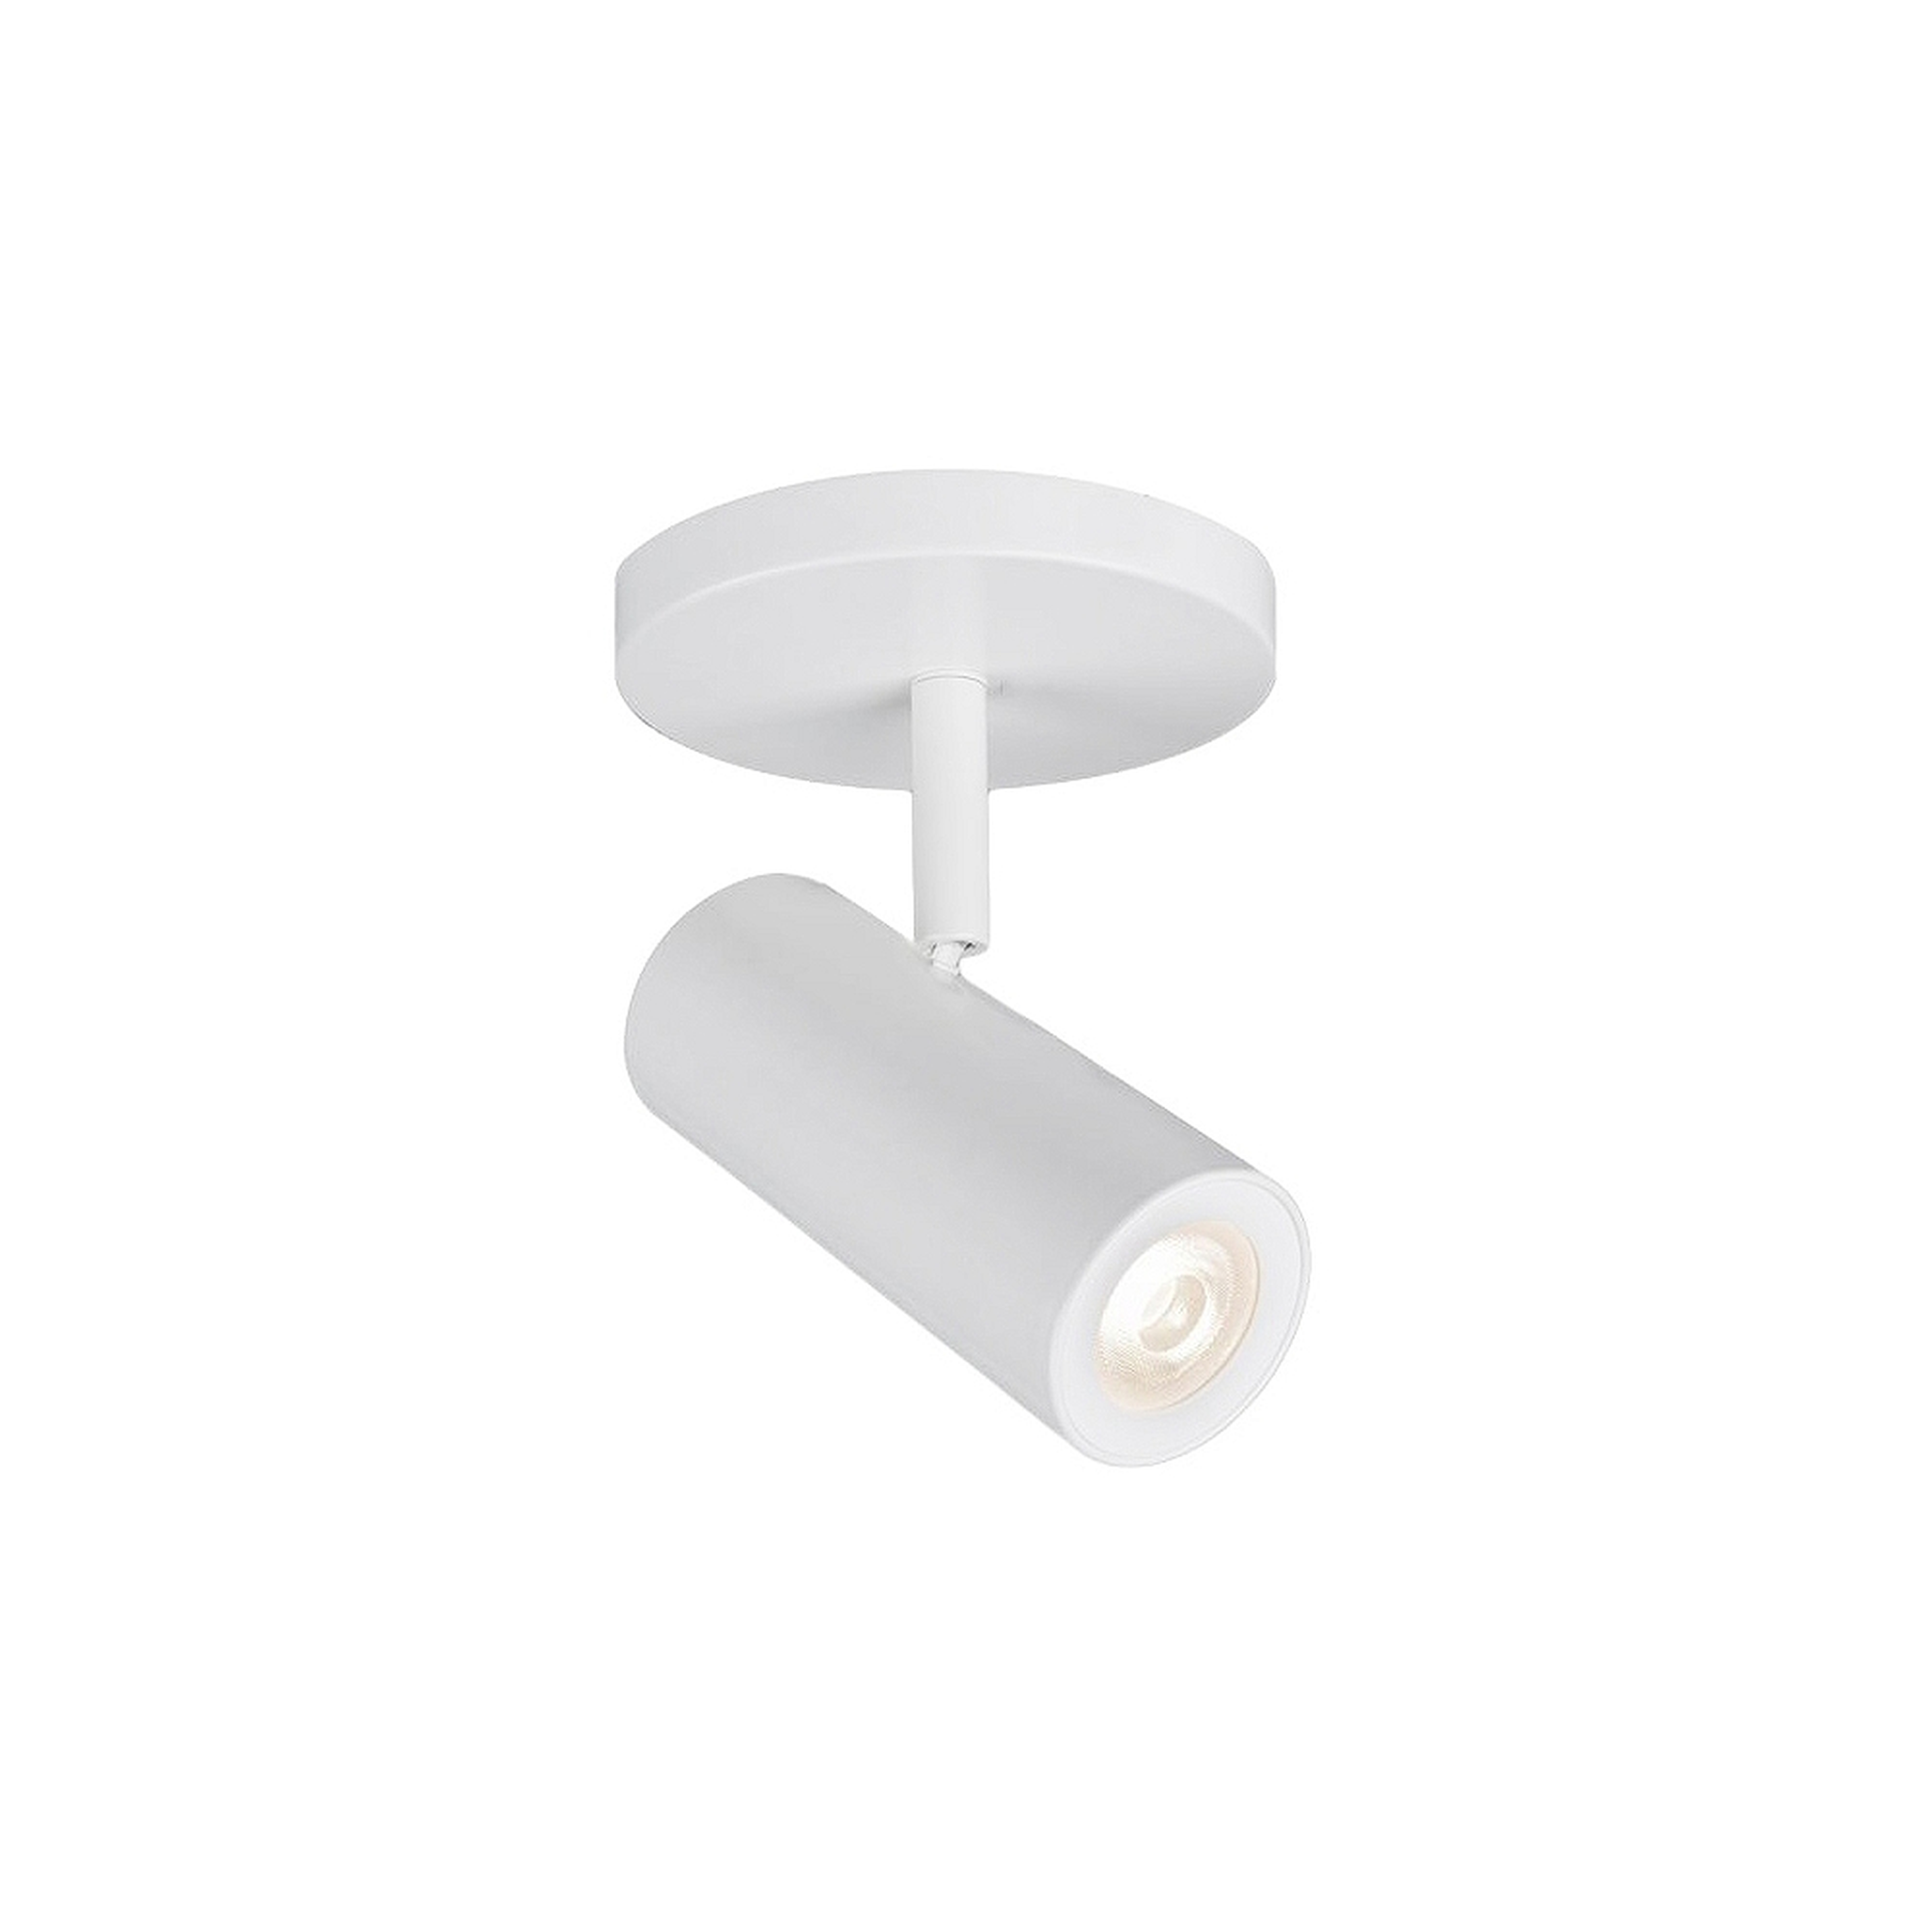 WAC Silo X10 White 3000K LED Track Ceiling Spot Light - Style # 55W41 - Lamps Plus